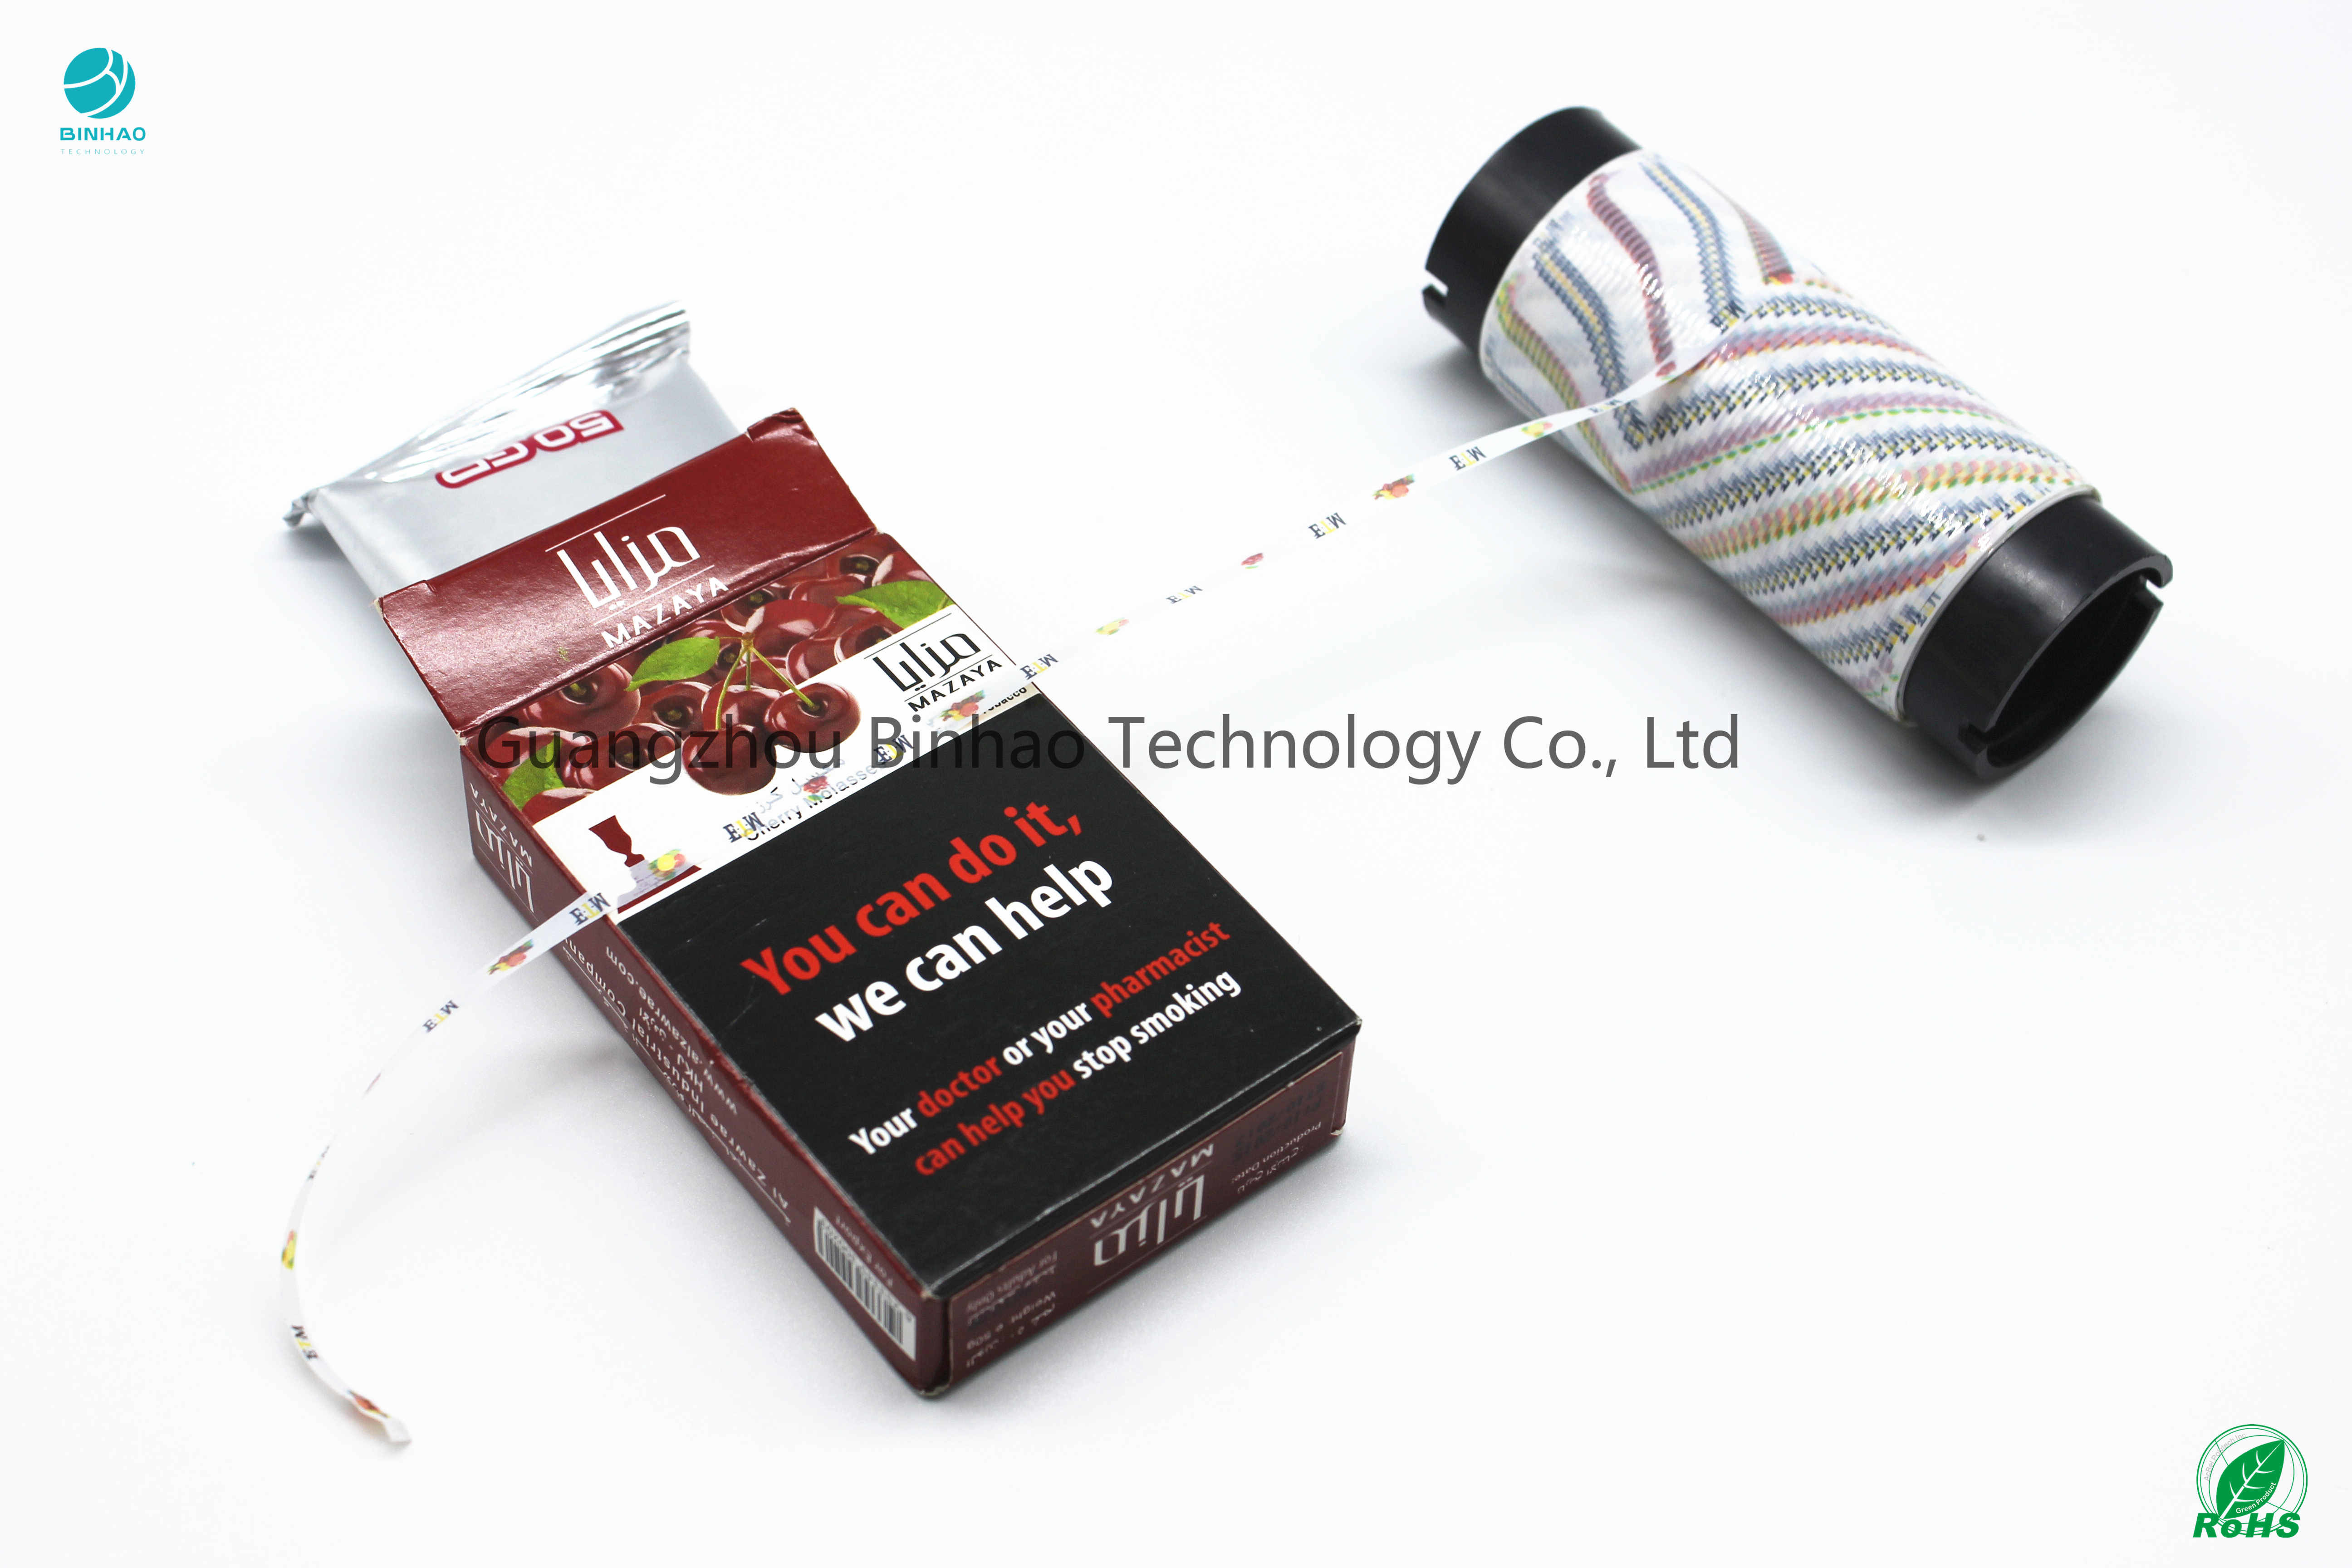 Zigaretten-Melasse-Riss-abstreifende Band-biologisch abbaubare Funktion kundenspezifischer Logo Printed Durable